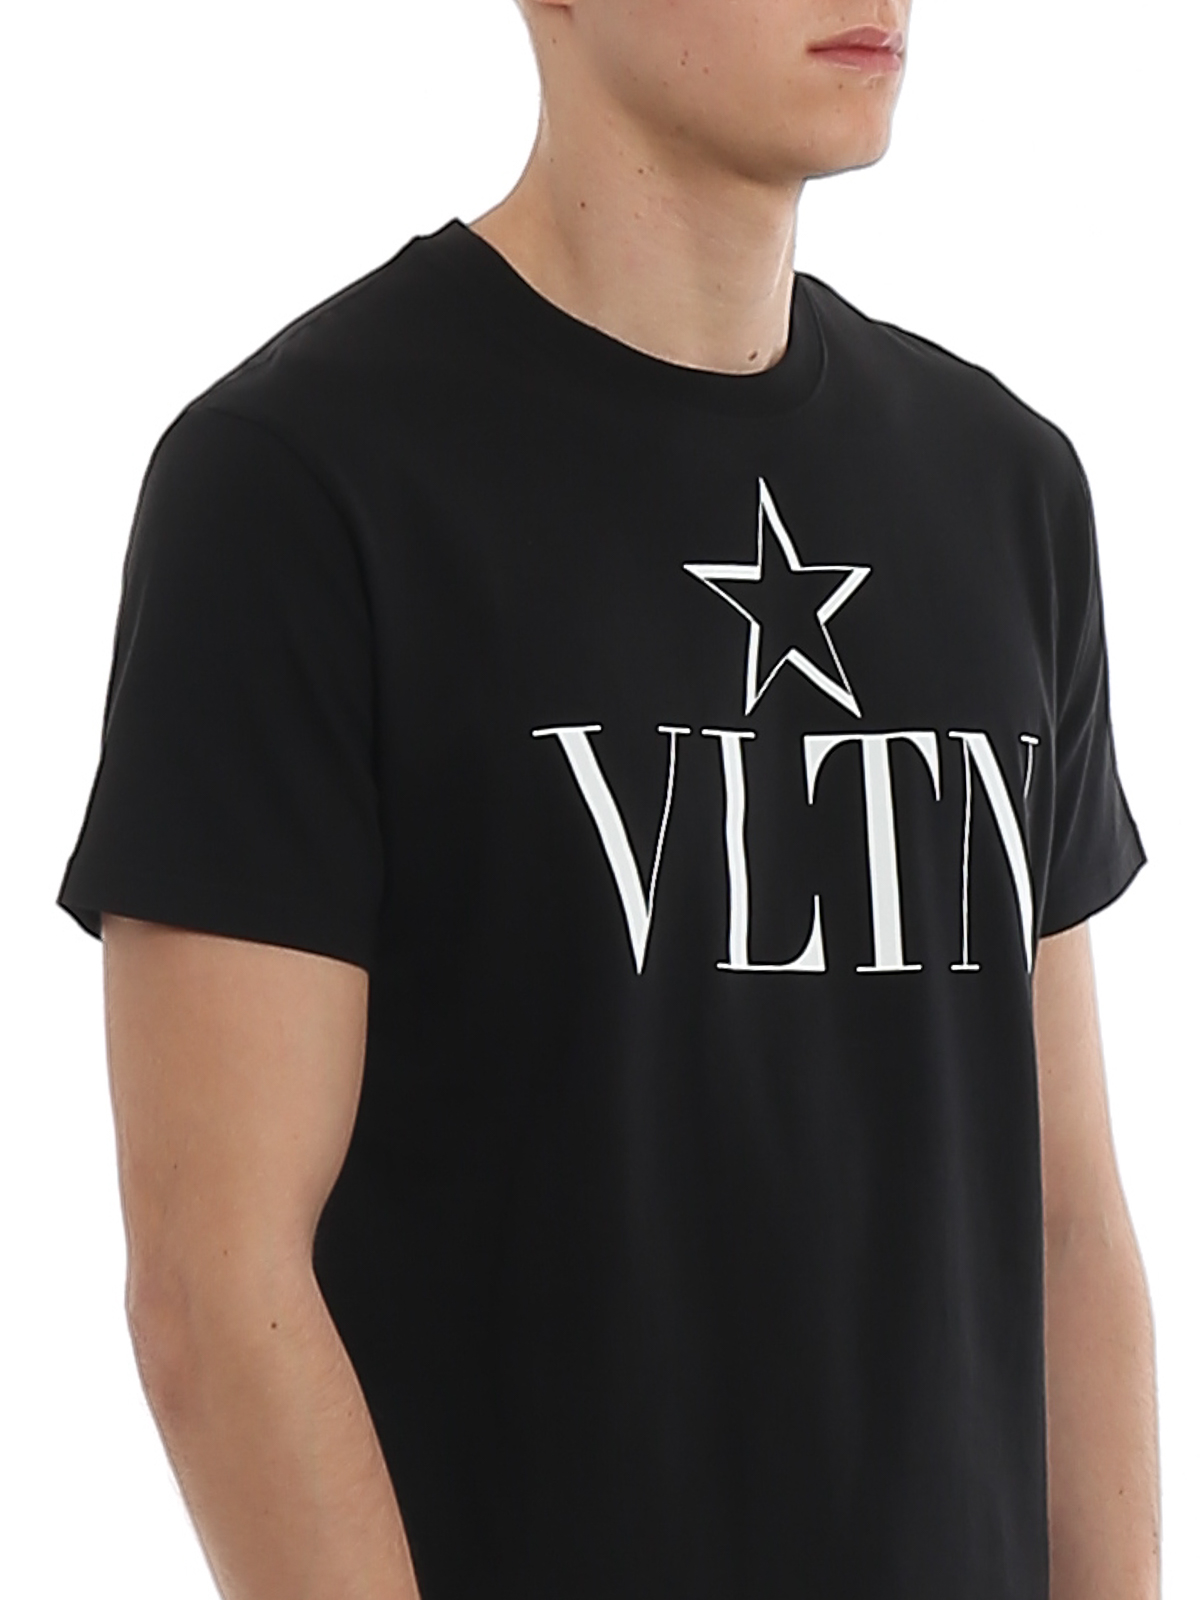 Tシャツ Valentino - Tシャツ - Vltn Star - TV3MG05P6380NI | iKRIX.com